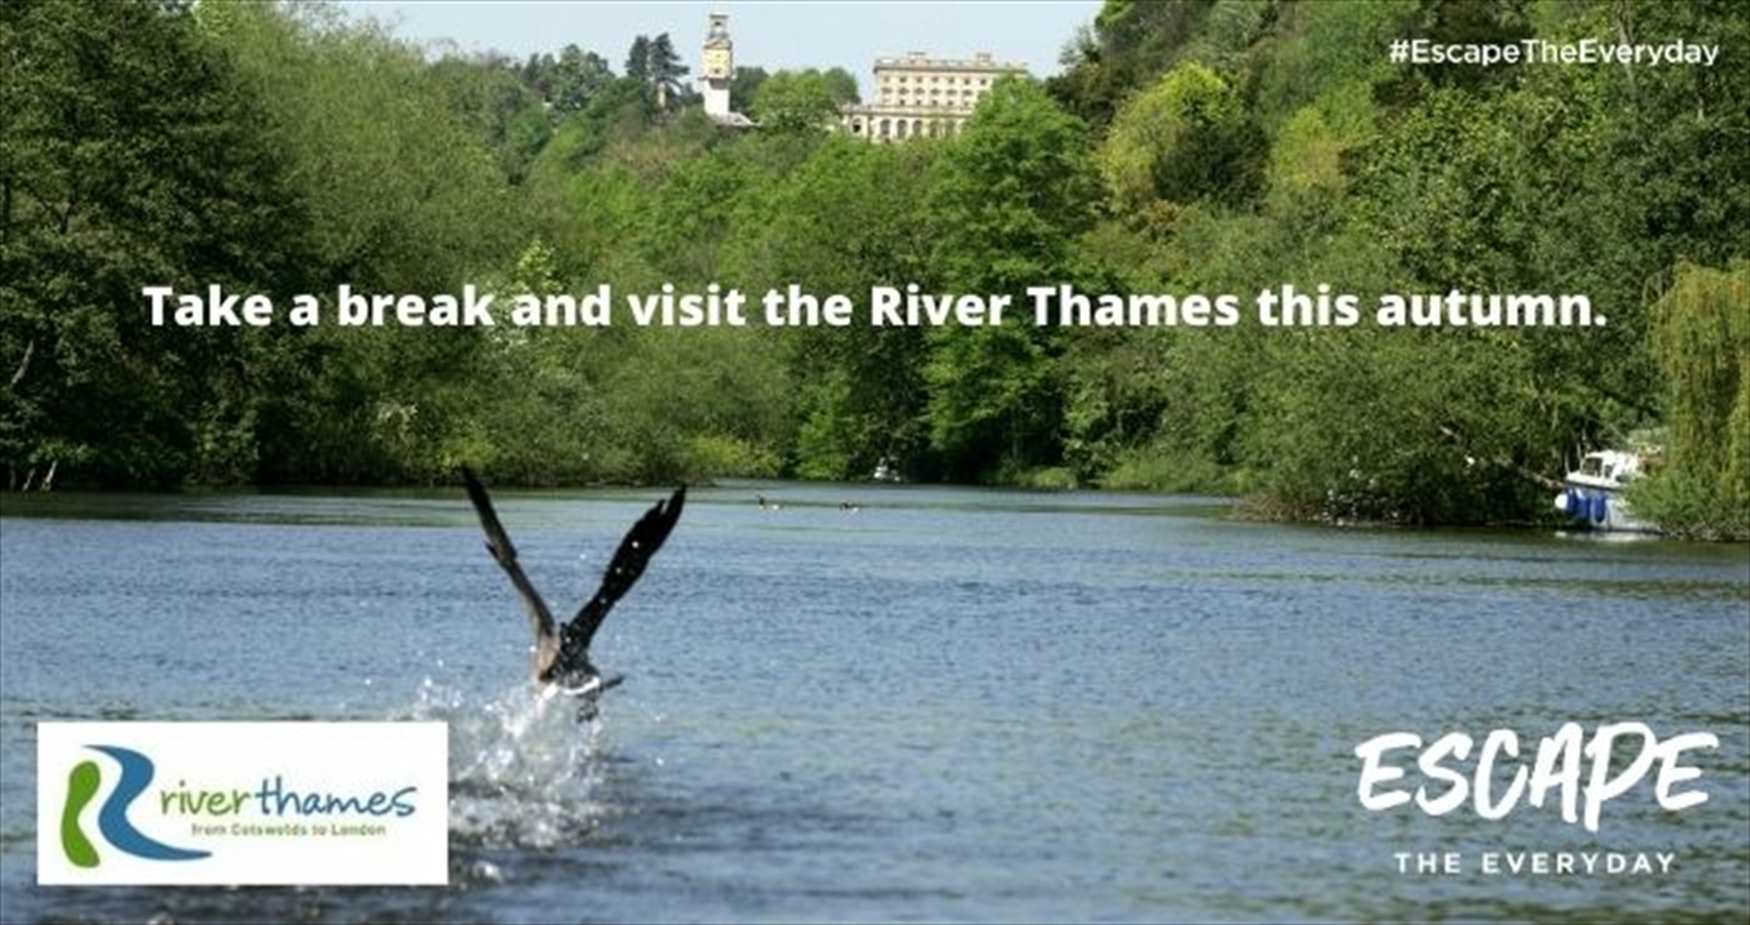 Take a Break along the River Thames this Autumn